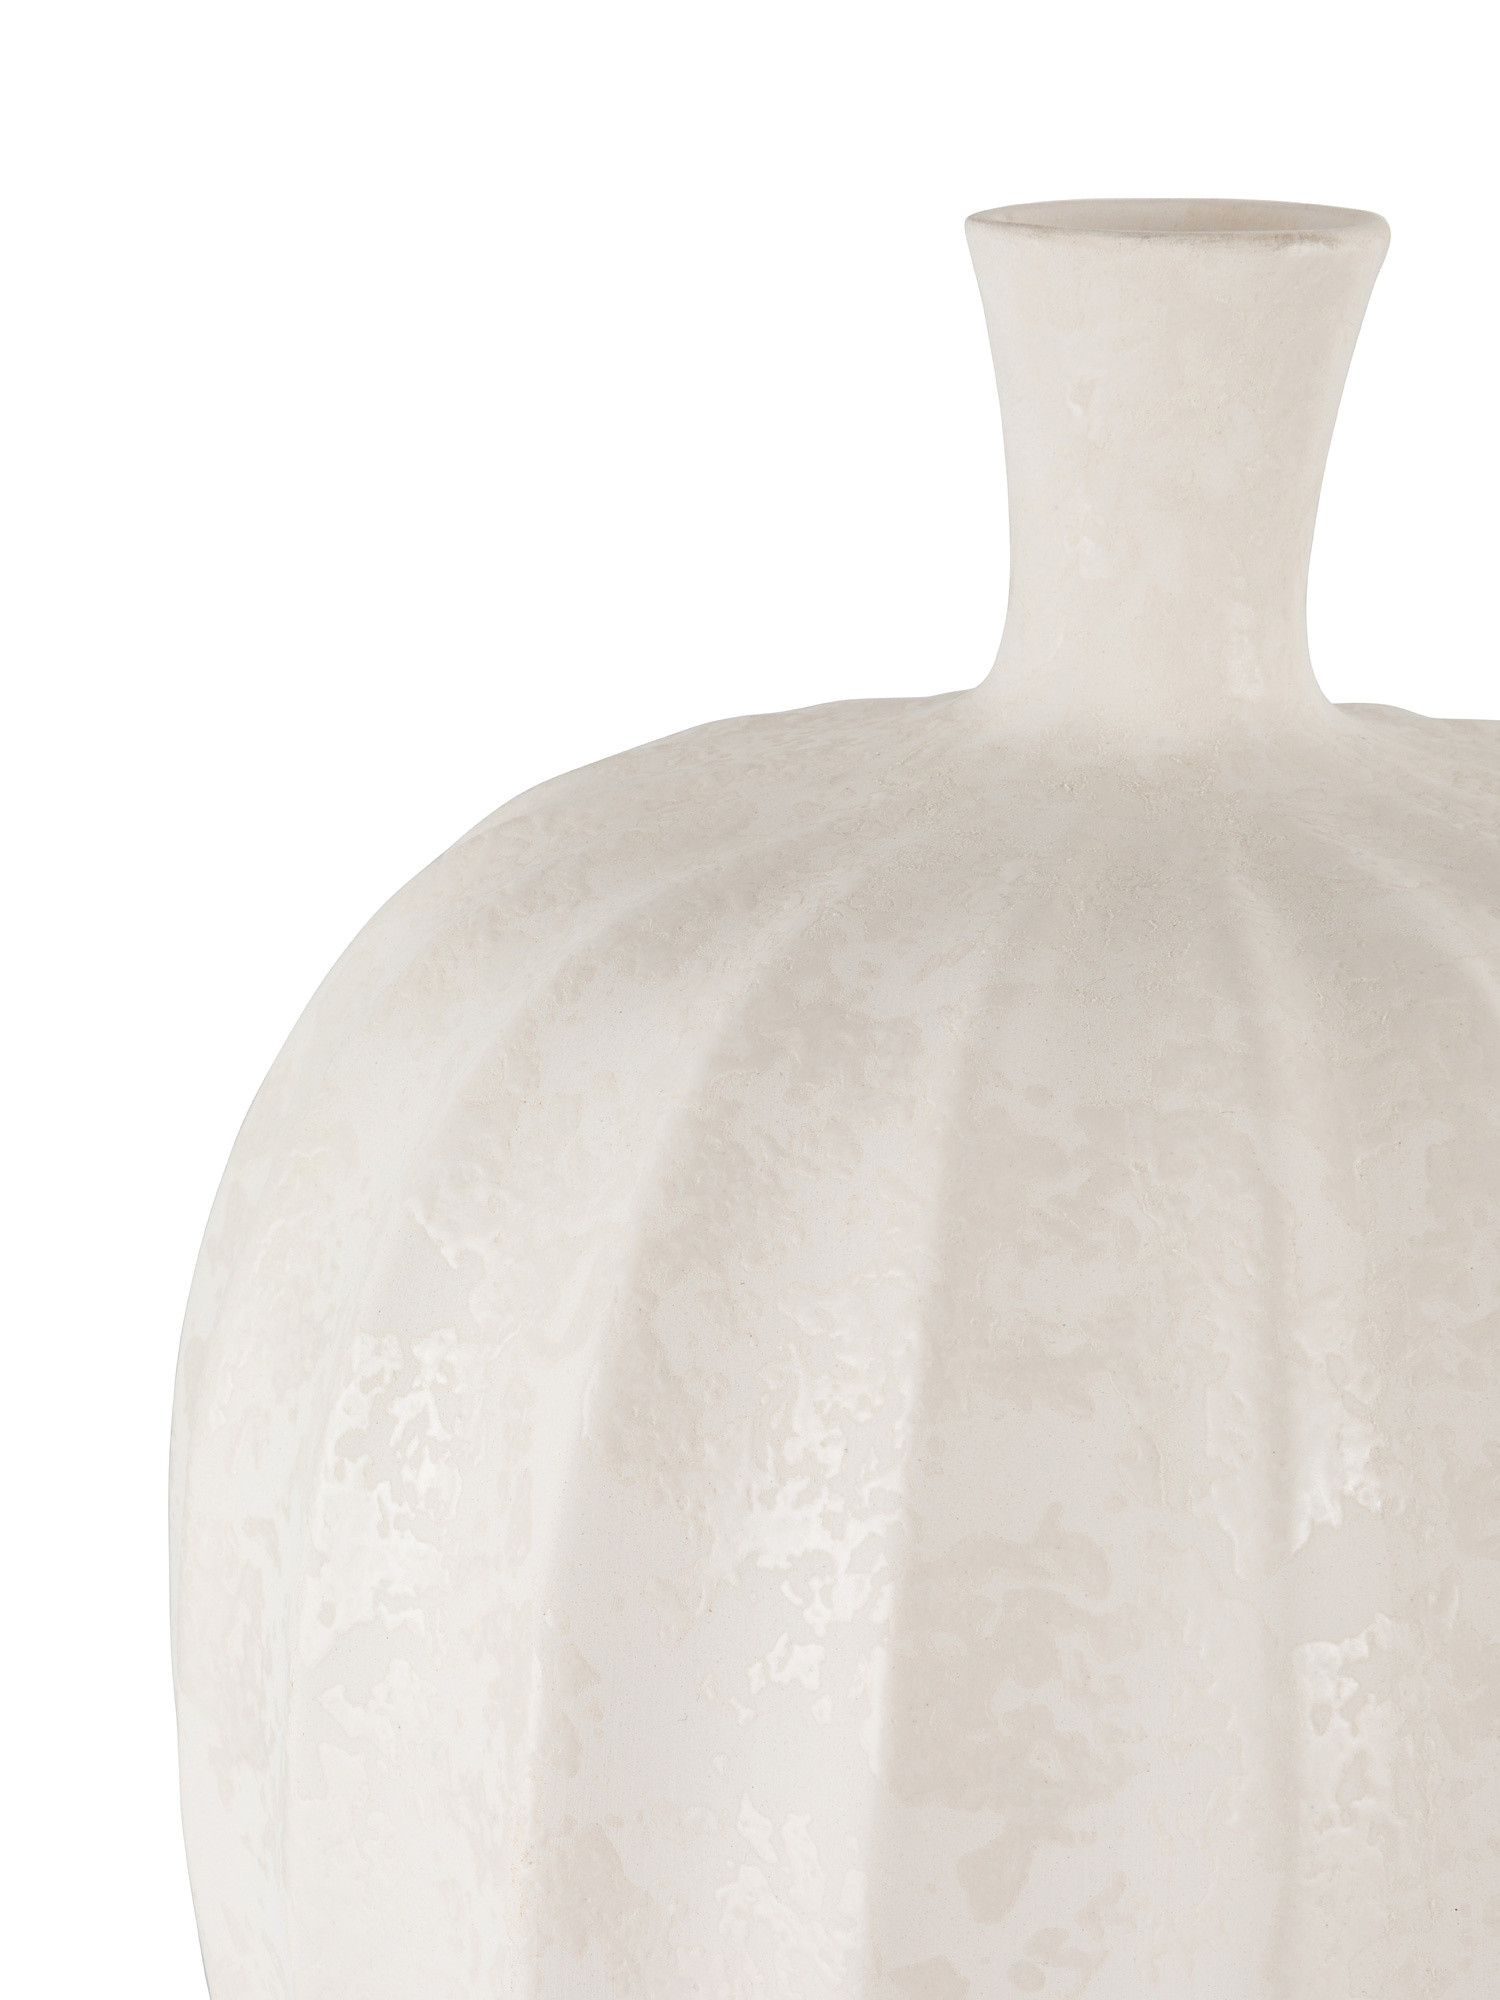 Vaso ceramica portoghese, Bianco, large image number 1